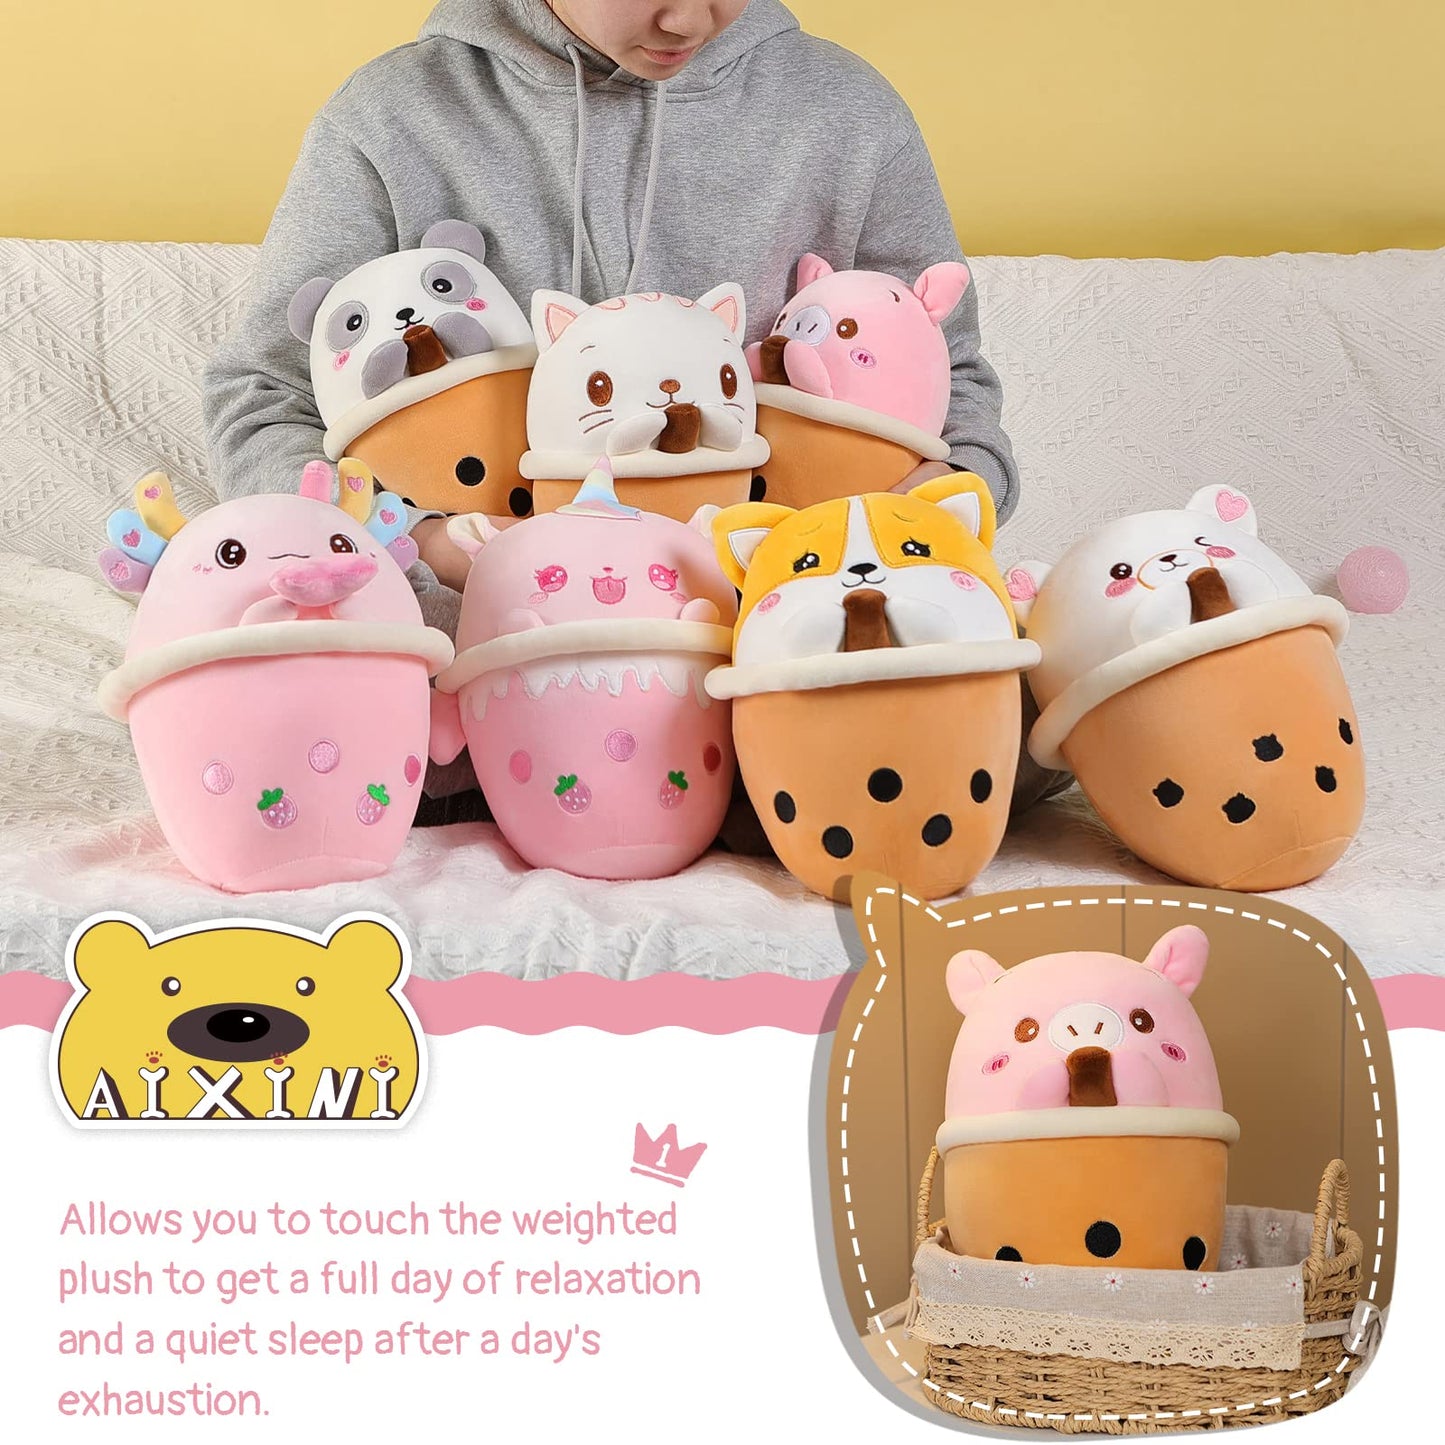 25 CM / 10 inch Cute Pig Boba Plush Stuffed Soft Animal Bubble Tea Pillow, Super Soft Cartoon Hug Toy Bedding Gift, Children's Sleeping Kawaii Pillow